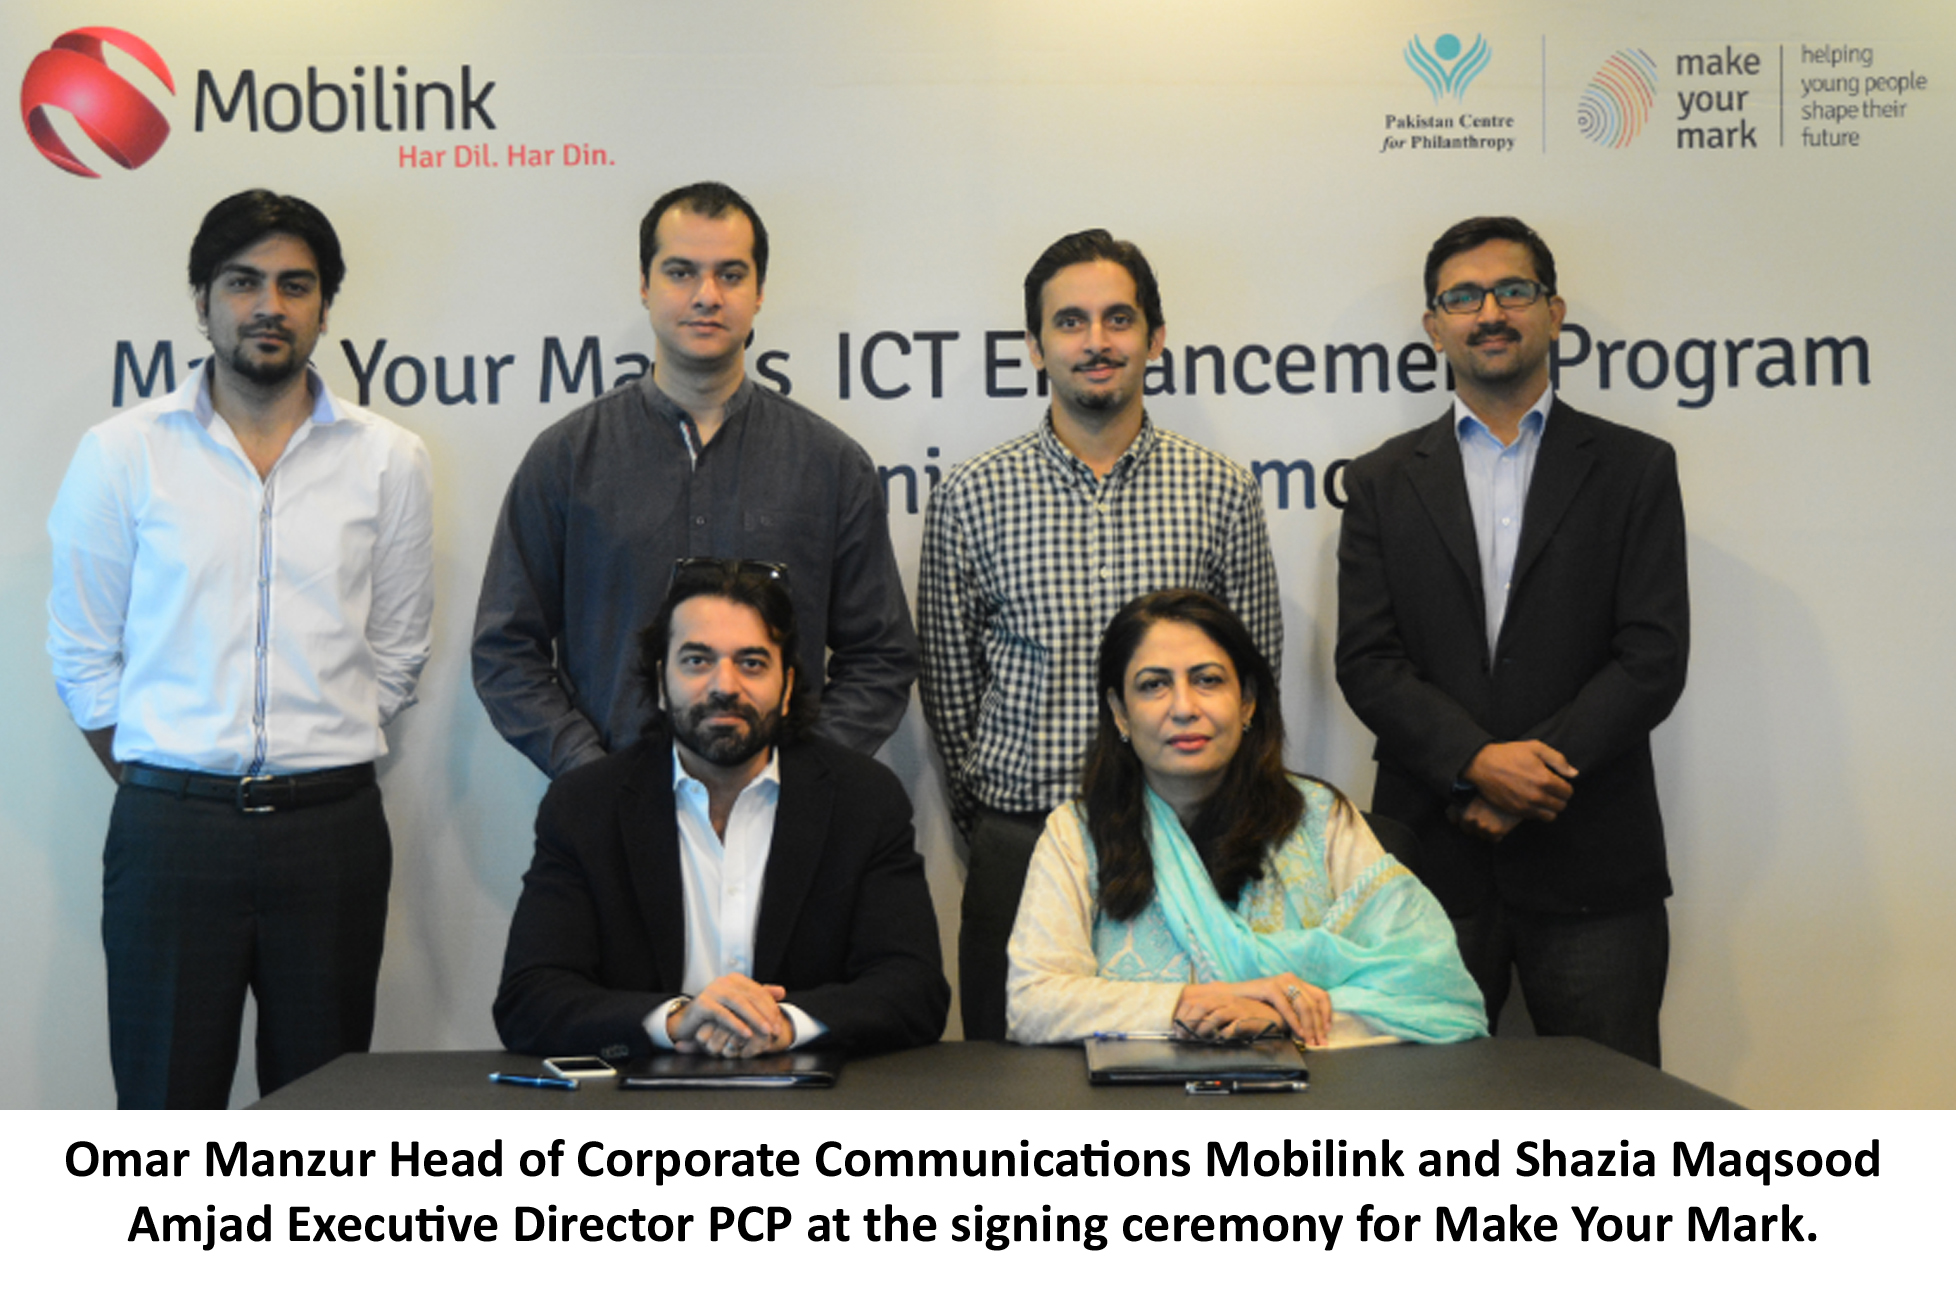 Mobilink and Pakistan Centre for Philanthropy partnership